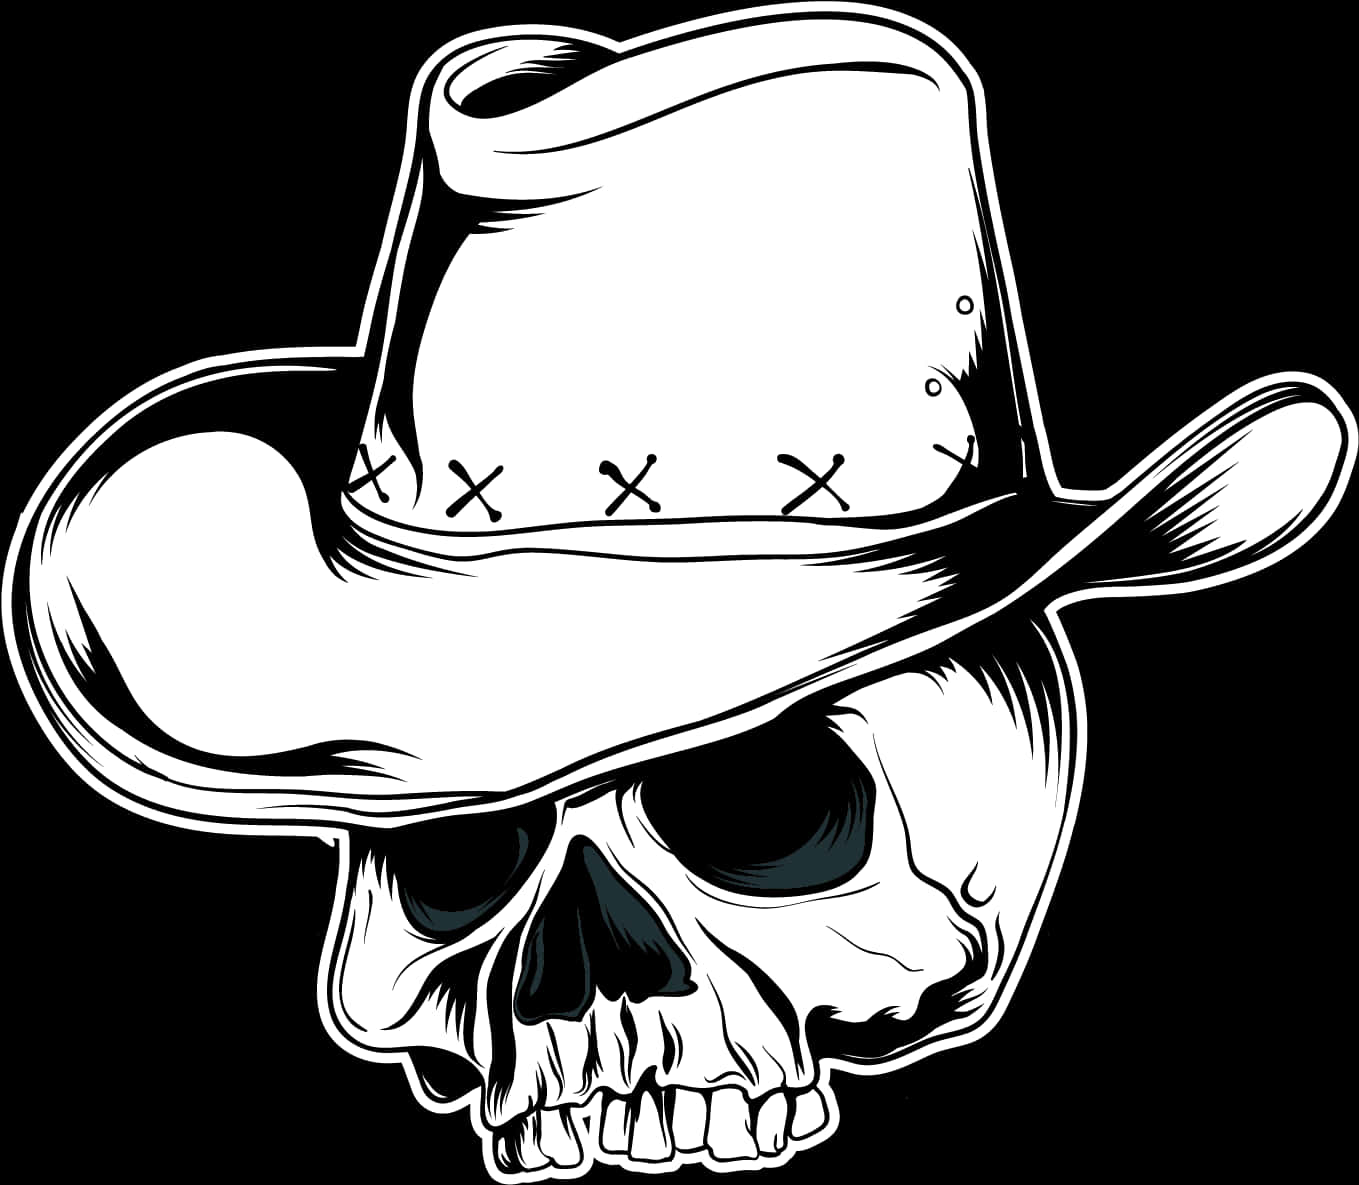 Download Cowboy Hat Skull Graphic | Wallpapers.com